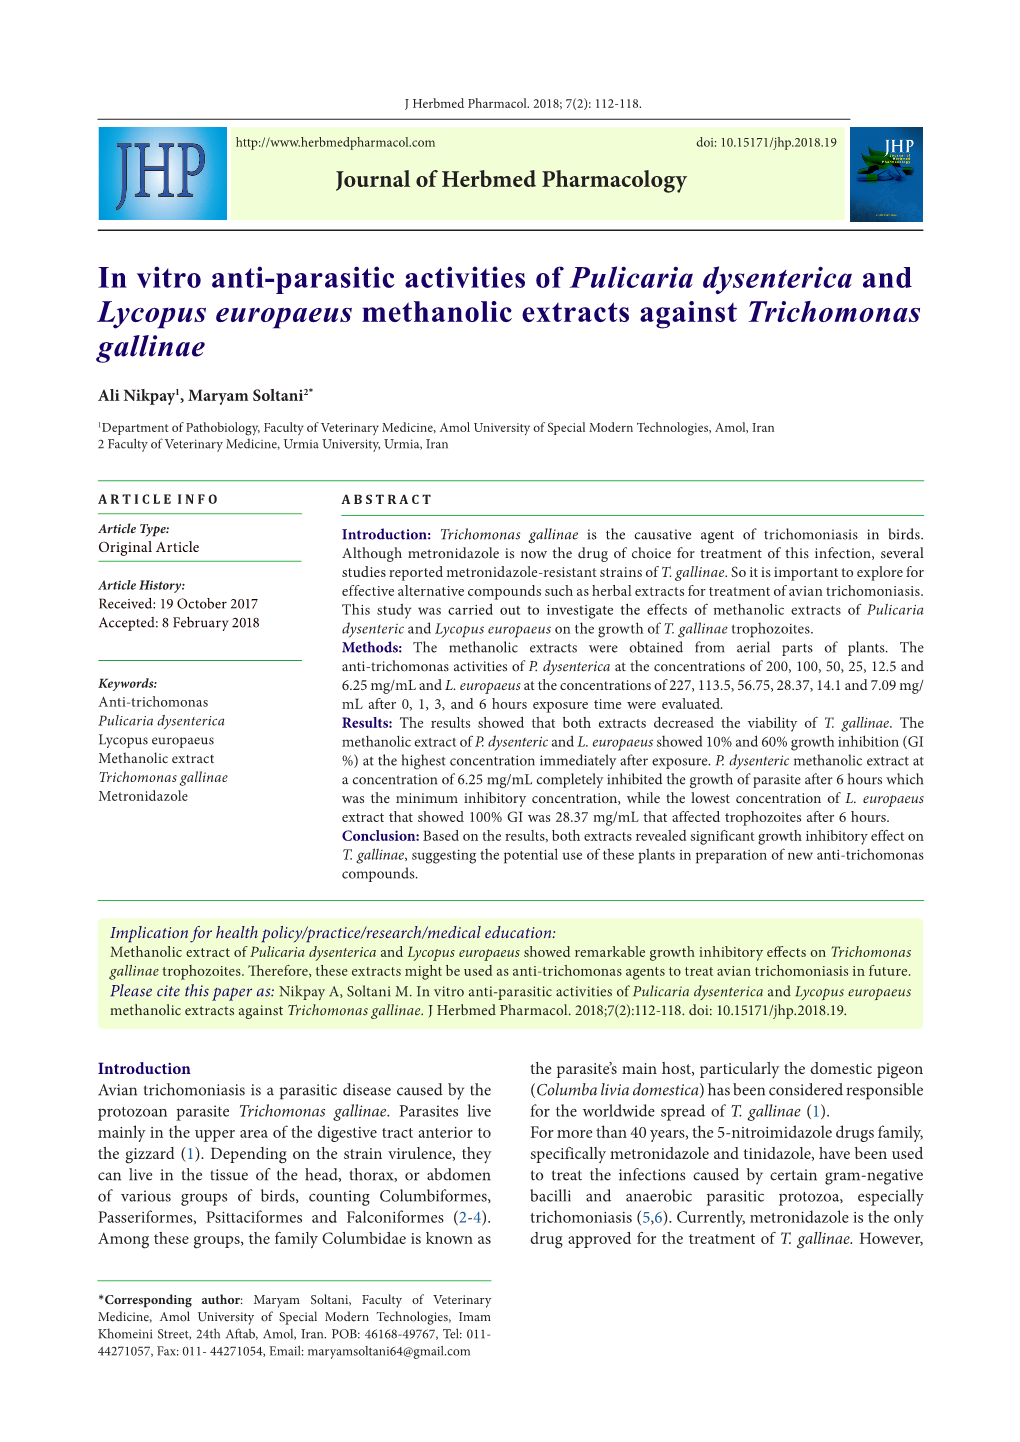 In Vitro Anti-Parasitic Activities of Pulicaria Dysenterica and Lycopus Europaeus Methanolic Extracts Against Trichomonas Gallinae